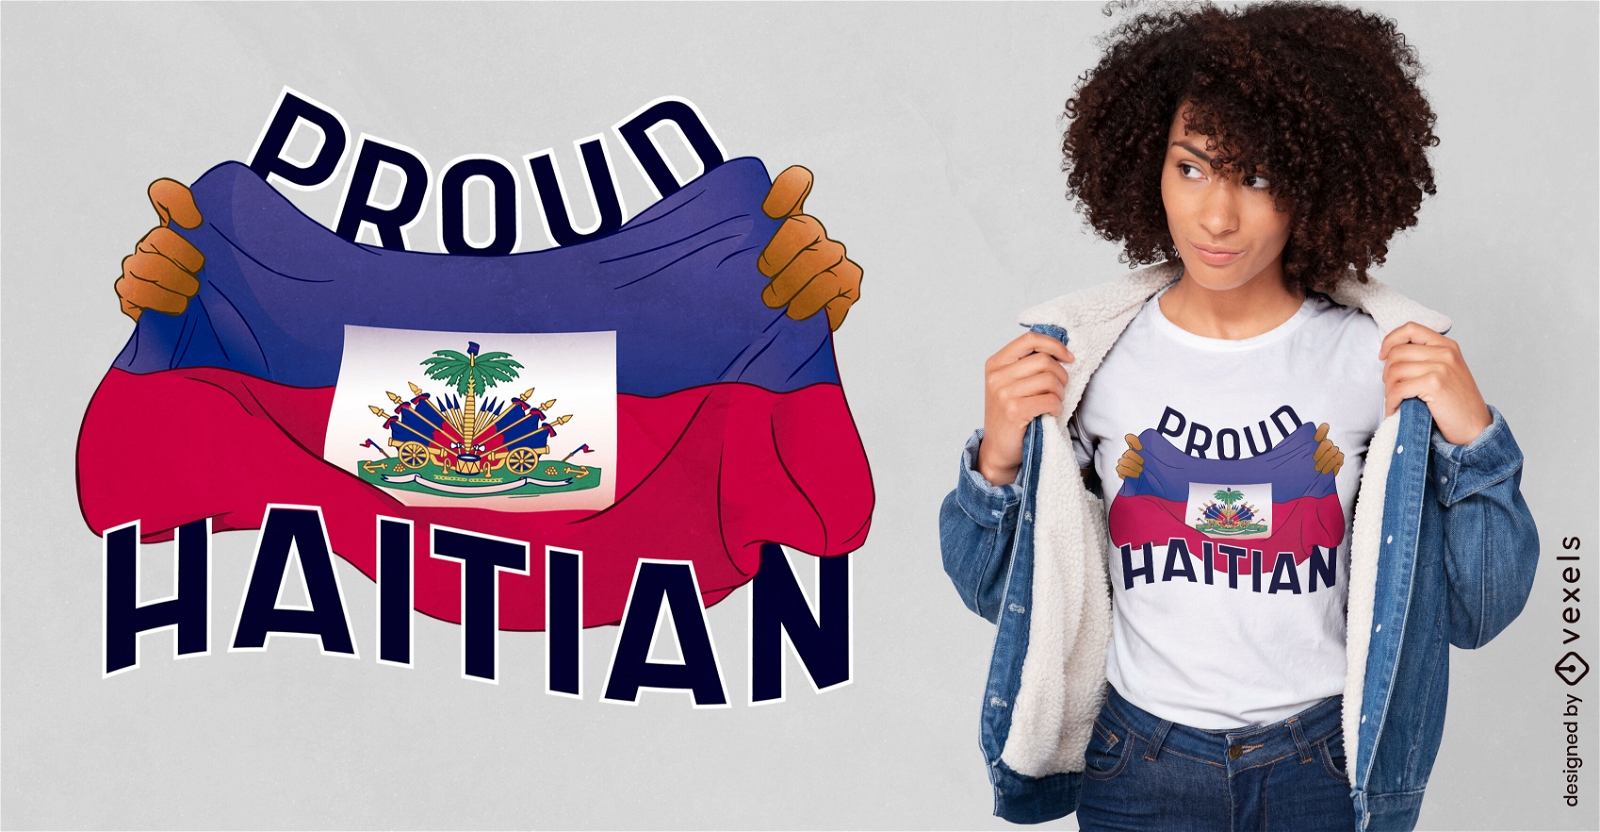 Proud Haitian t-shirt design